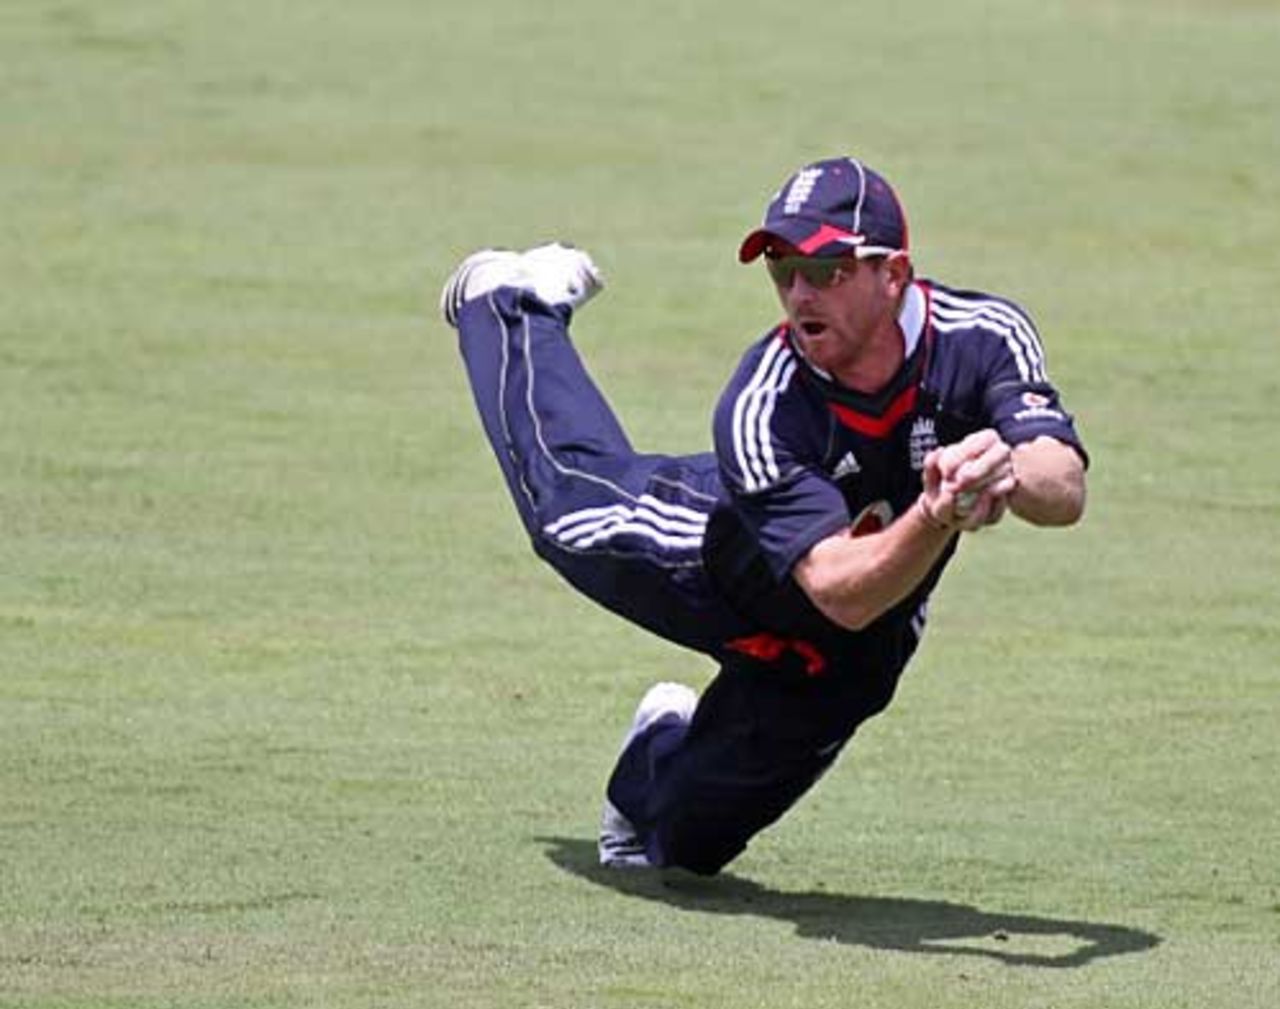 Paul Collingwood took a blinding catch to dismiss AB de Villiers, South Africa v England, 2nd ODI, Centurion, November 22, 2009